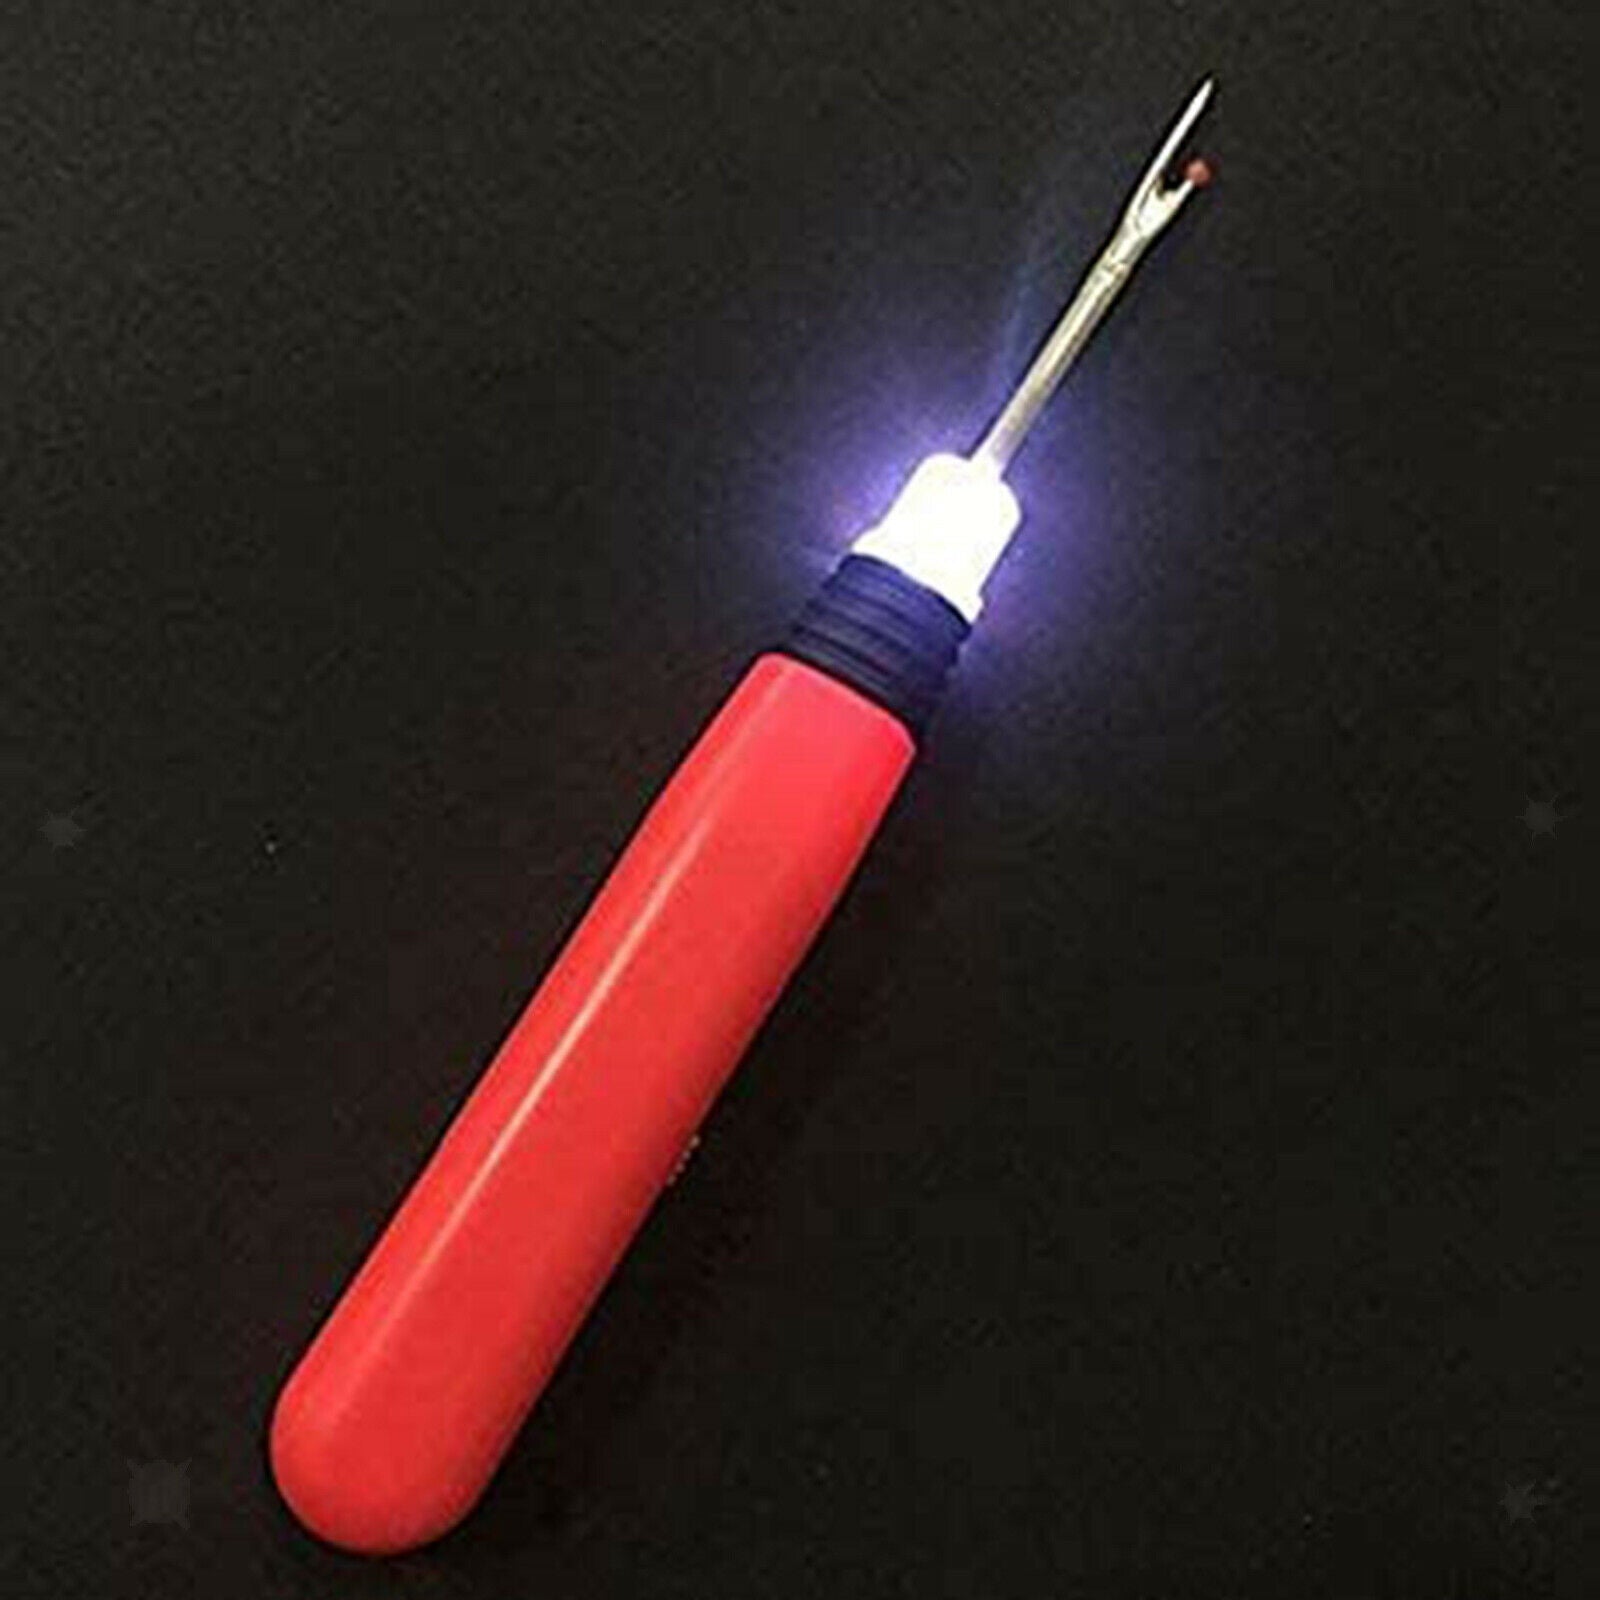 2x Handy Lighted Seam Ripper with Led Light Removing Seams DIY Cross Stitch